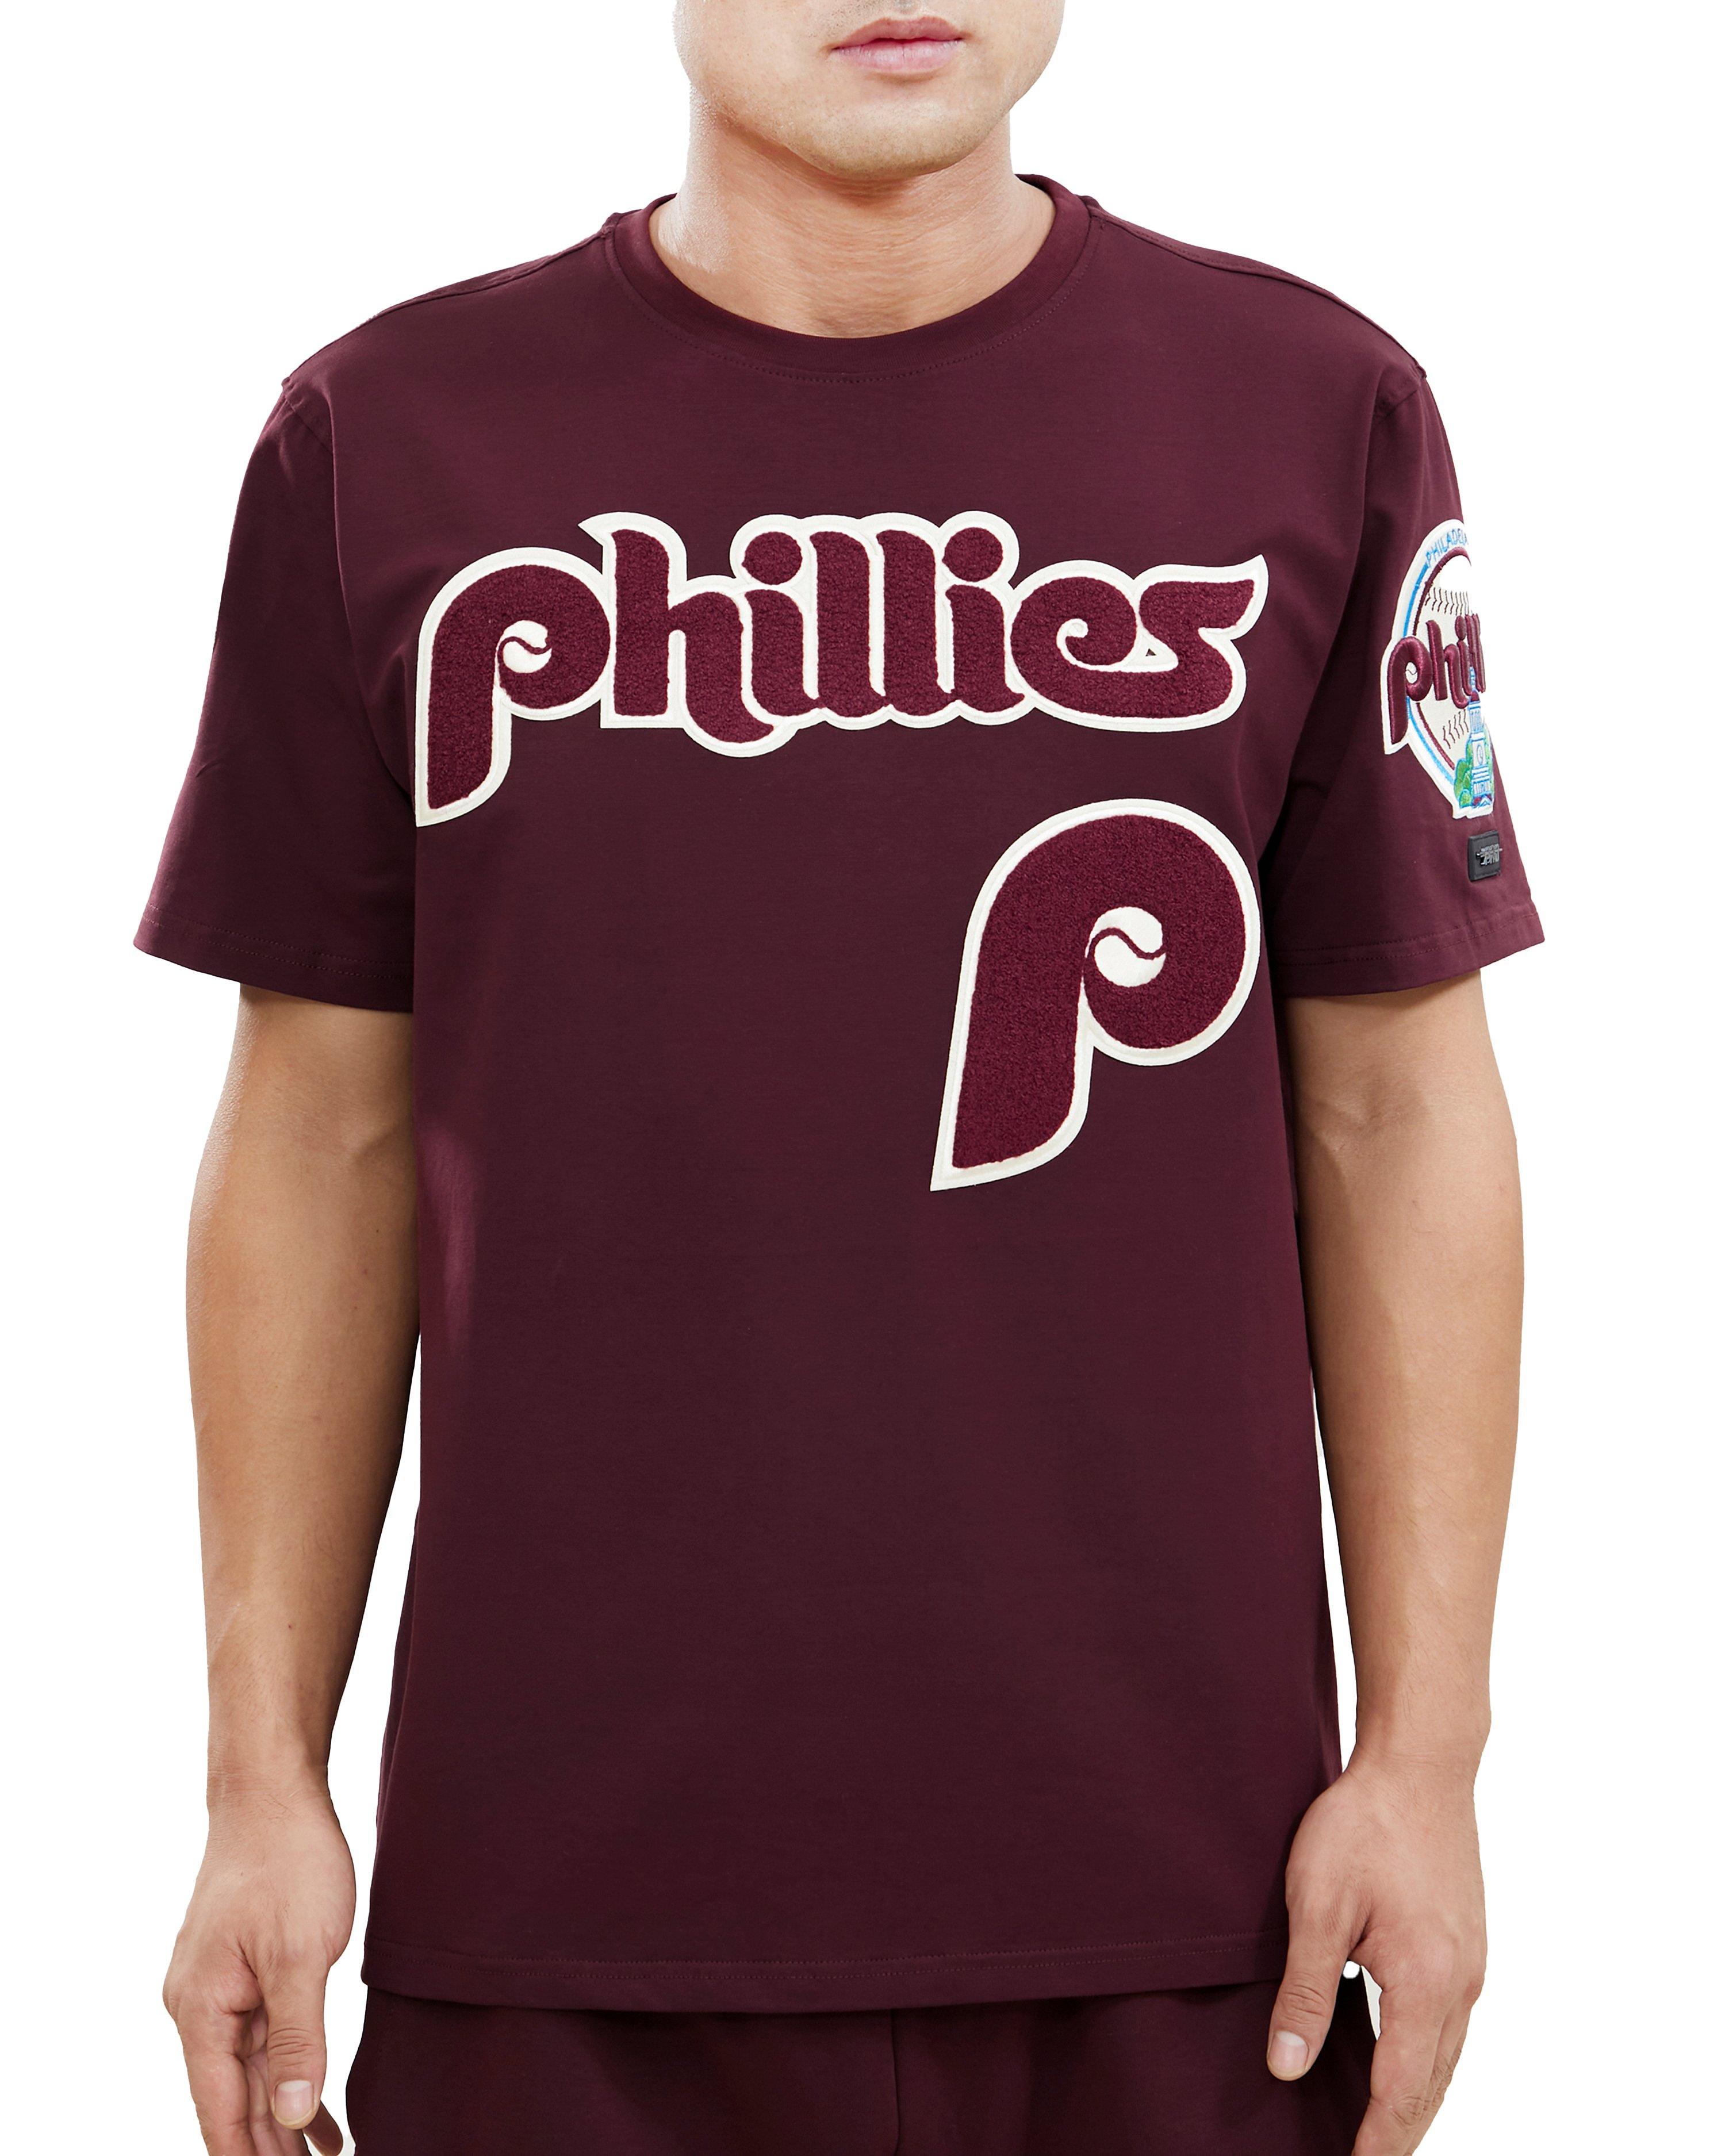 Official Mens Philadelphia Phillies Apparel & Merchandise